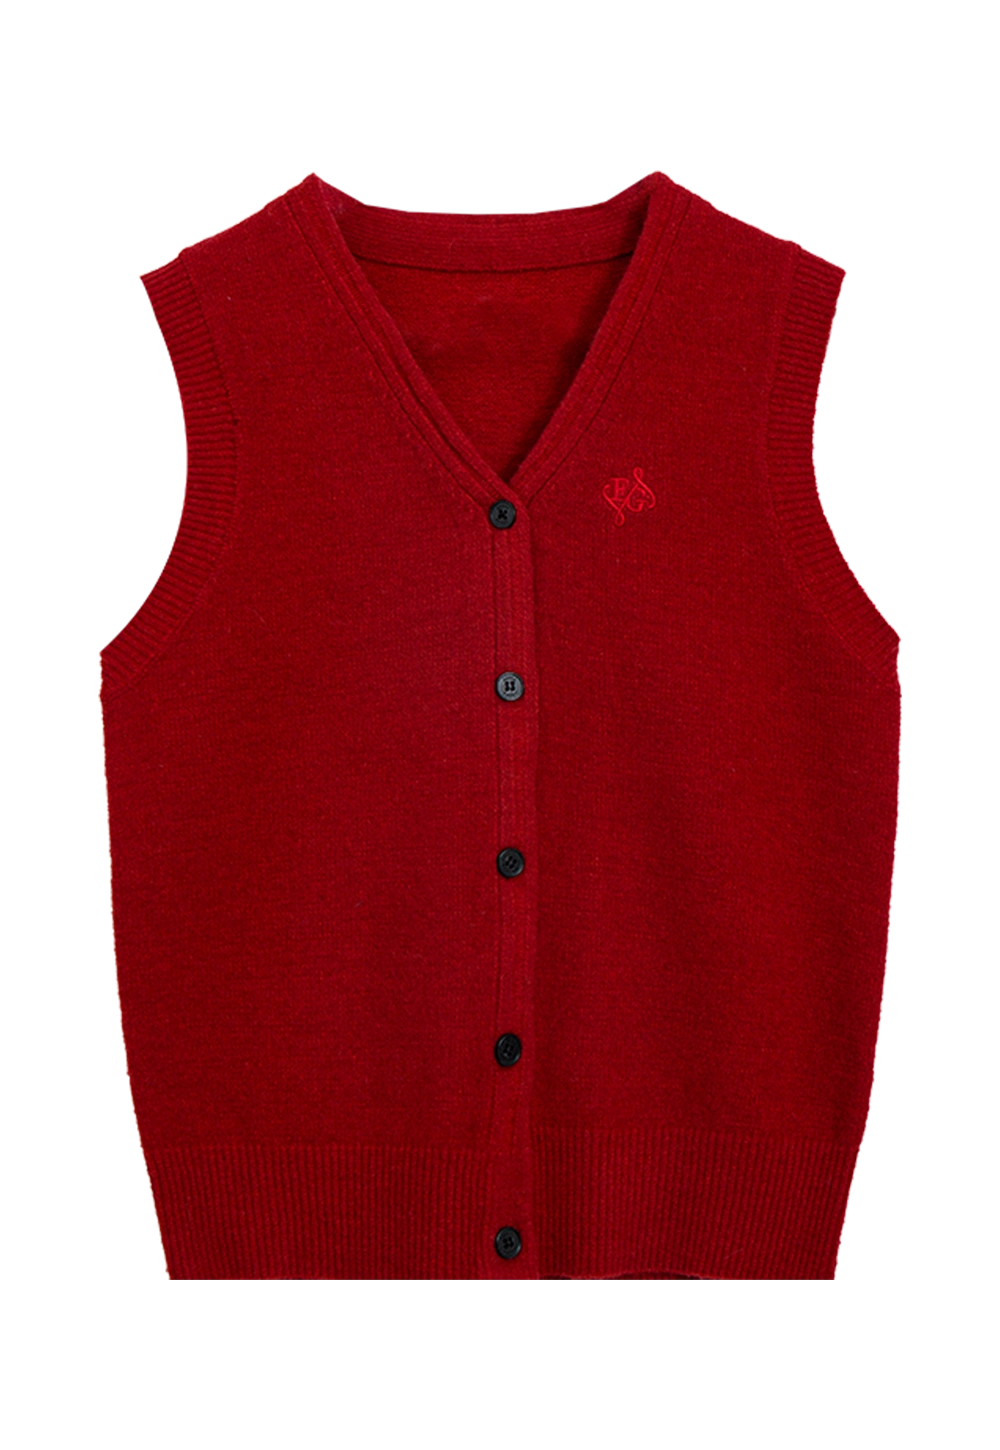 Women's V-Neck Knit Cardigan Vest with Button Closure